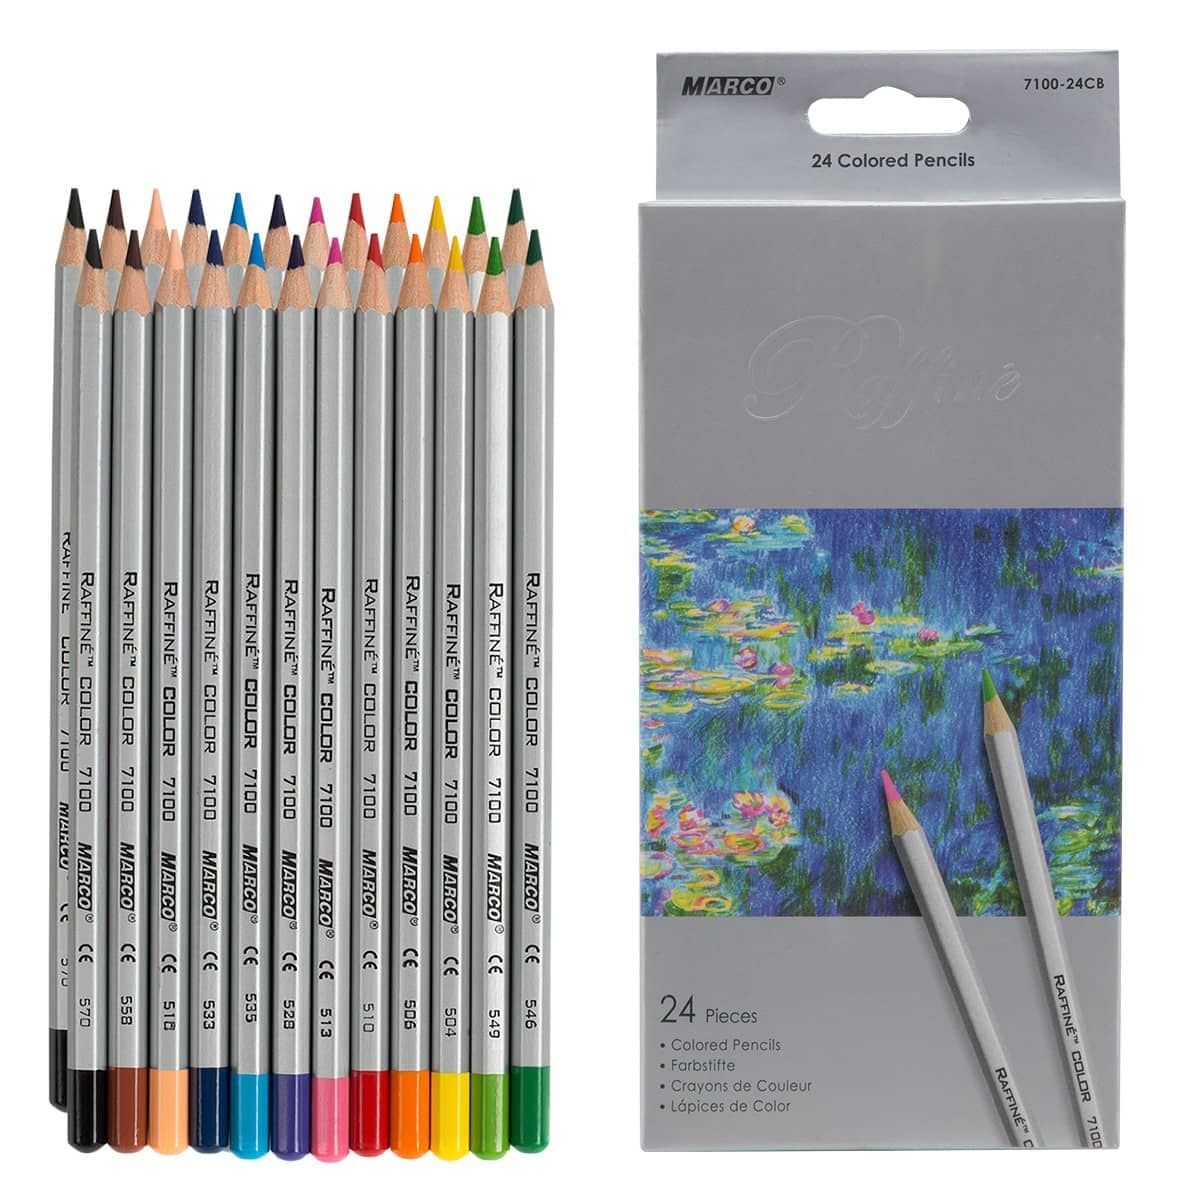 Strathmore 400 Series 9x12 Sketch Pad Set, 24 Colored Pencils